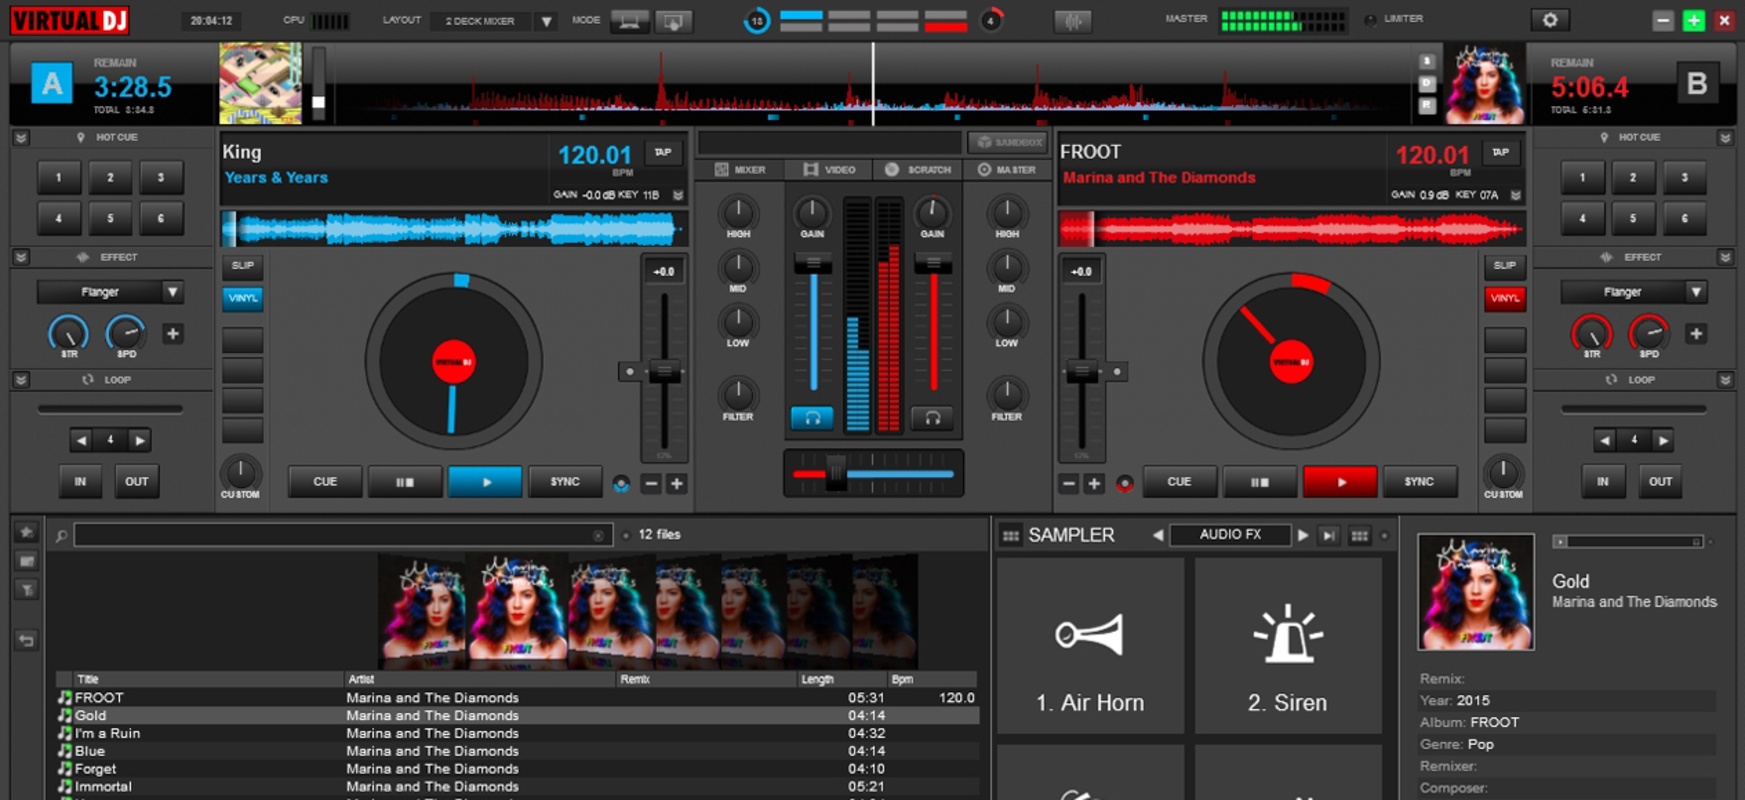 Virtual DJ 2023 Build 7462 for Windows Screenshot 3